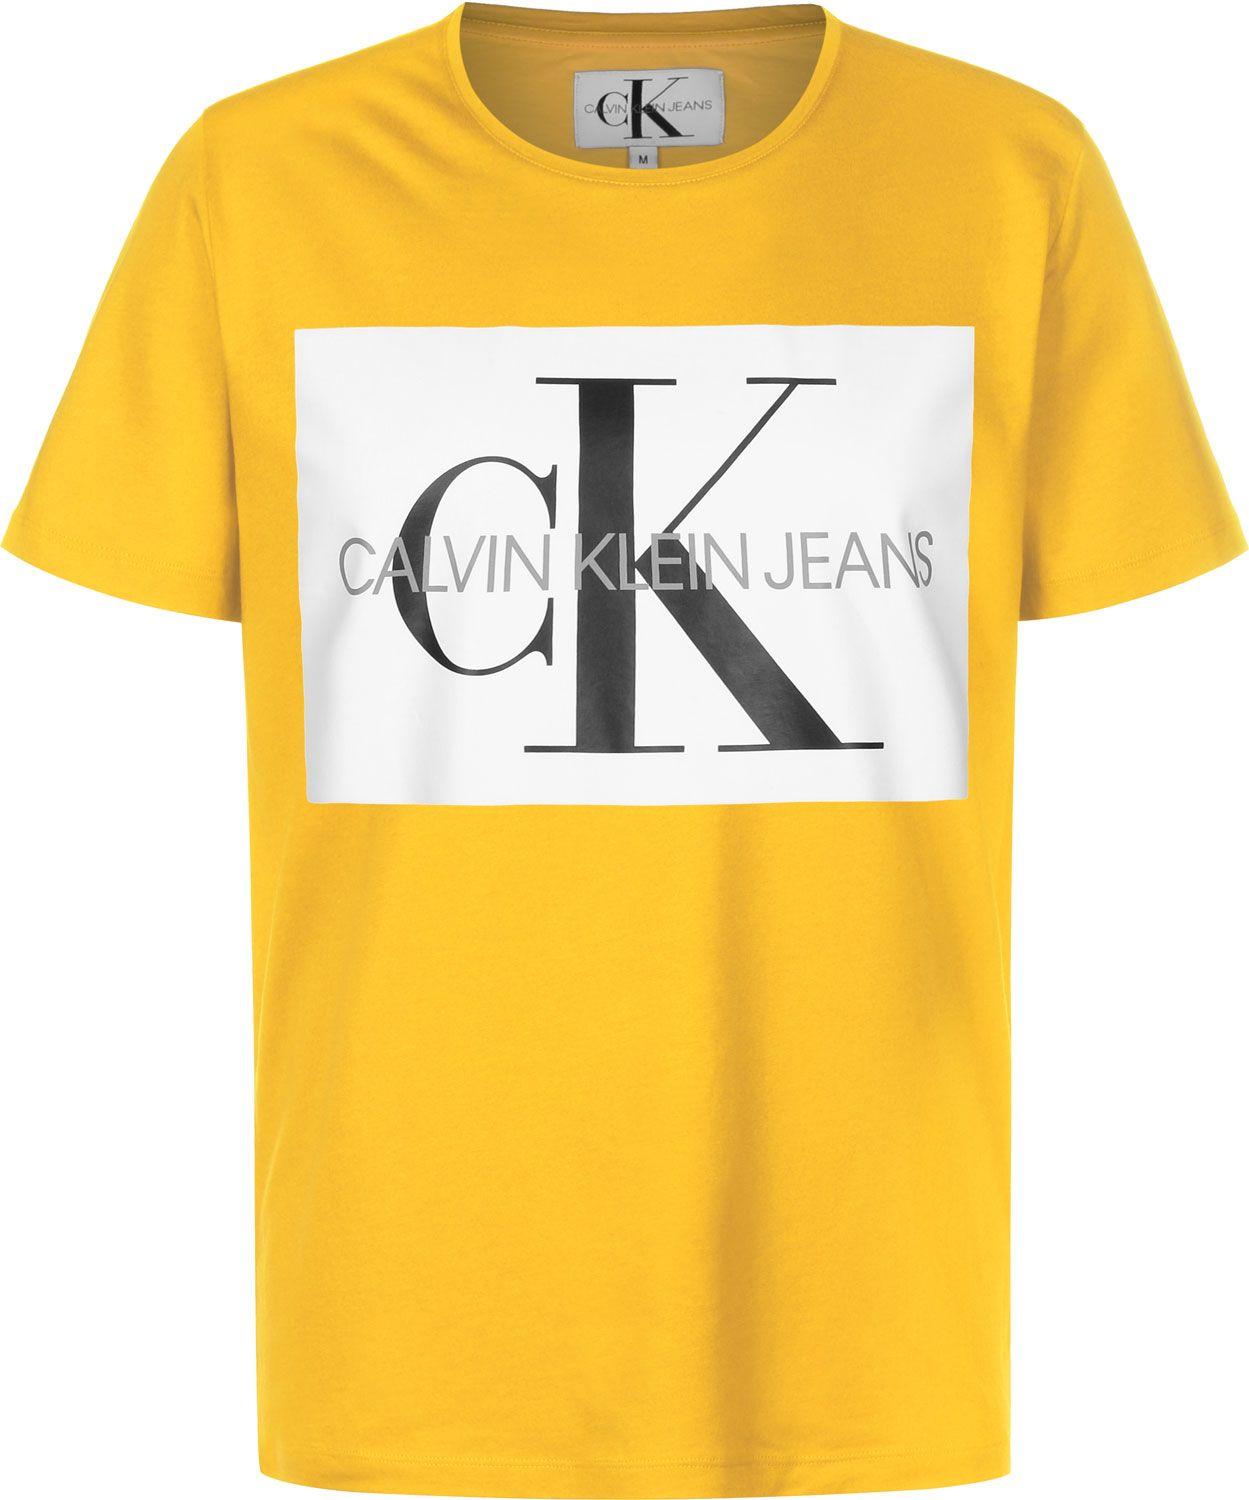 Red and Yellow Box Logo - Calvin Klein Jeans Monogram Box Logo T Shirt Yellow